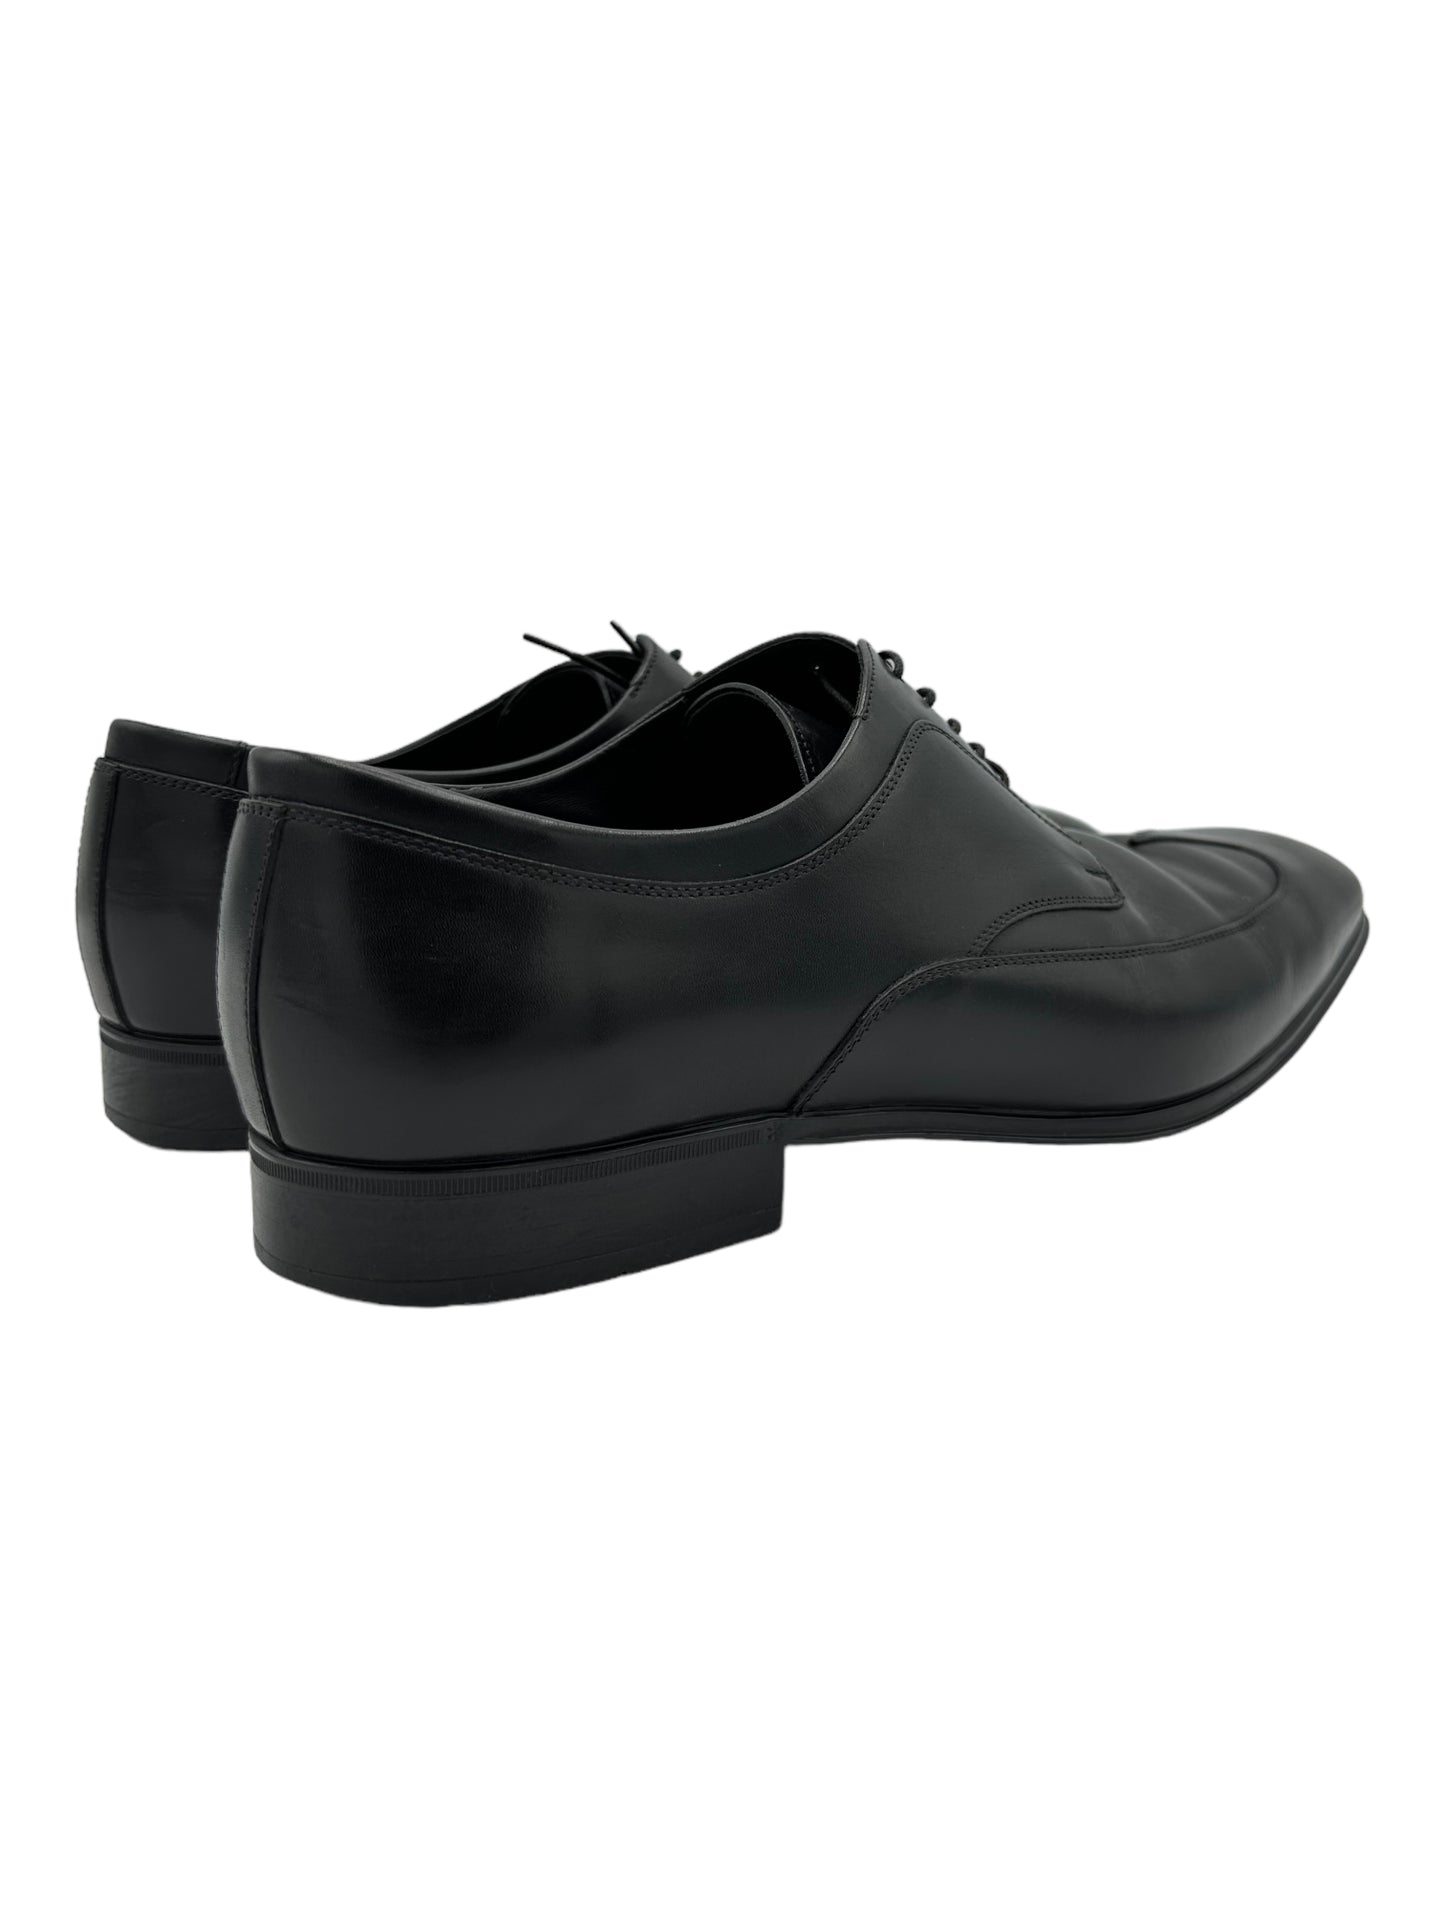 Salvatore Ferragamo Black Wingtip Oxford Leather Dress Shoes